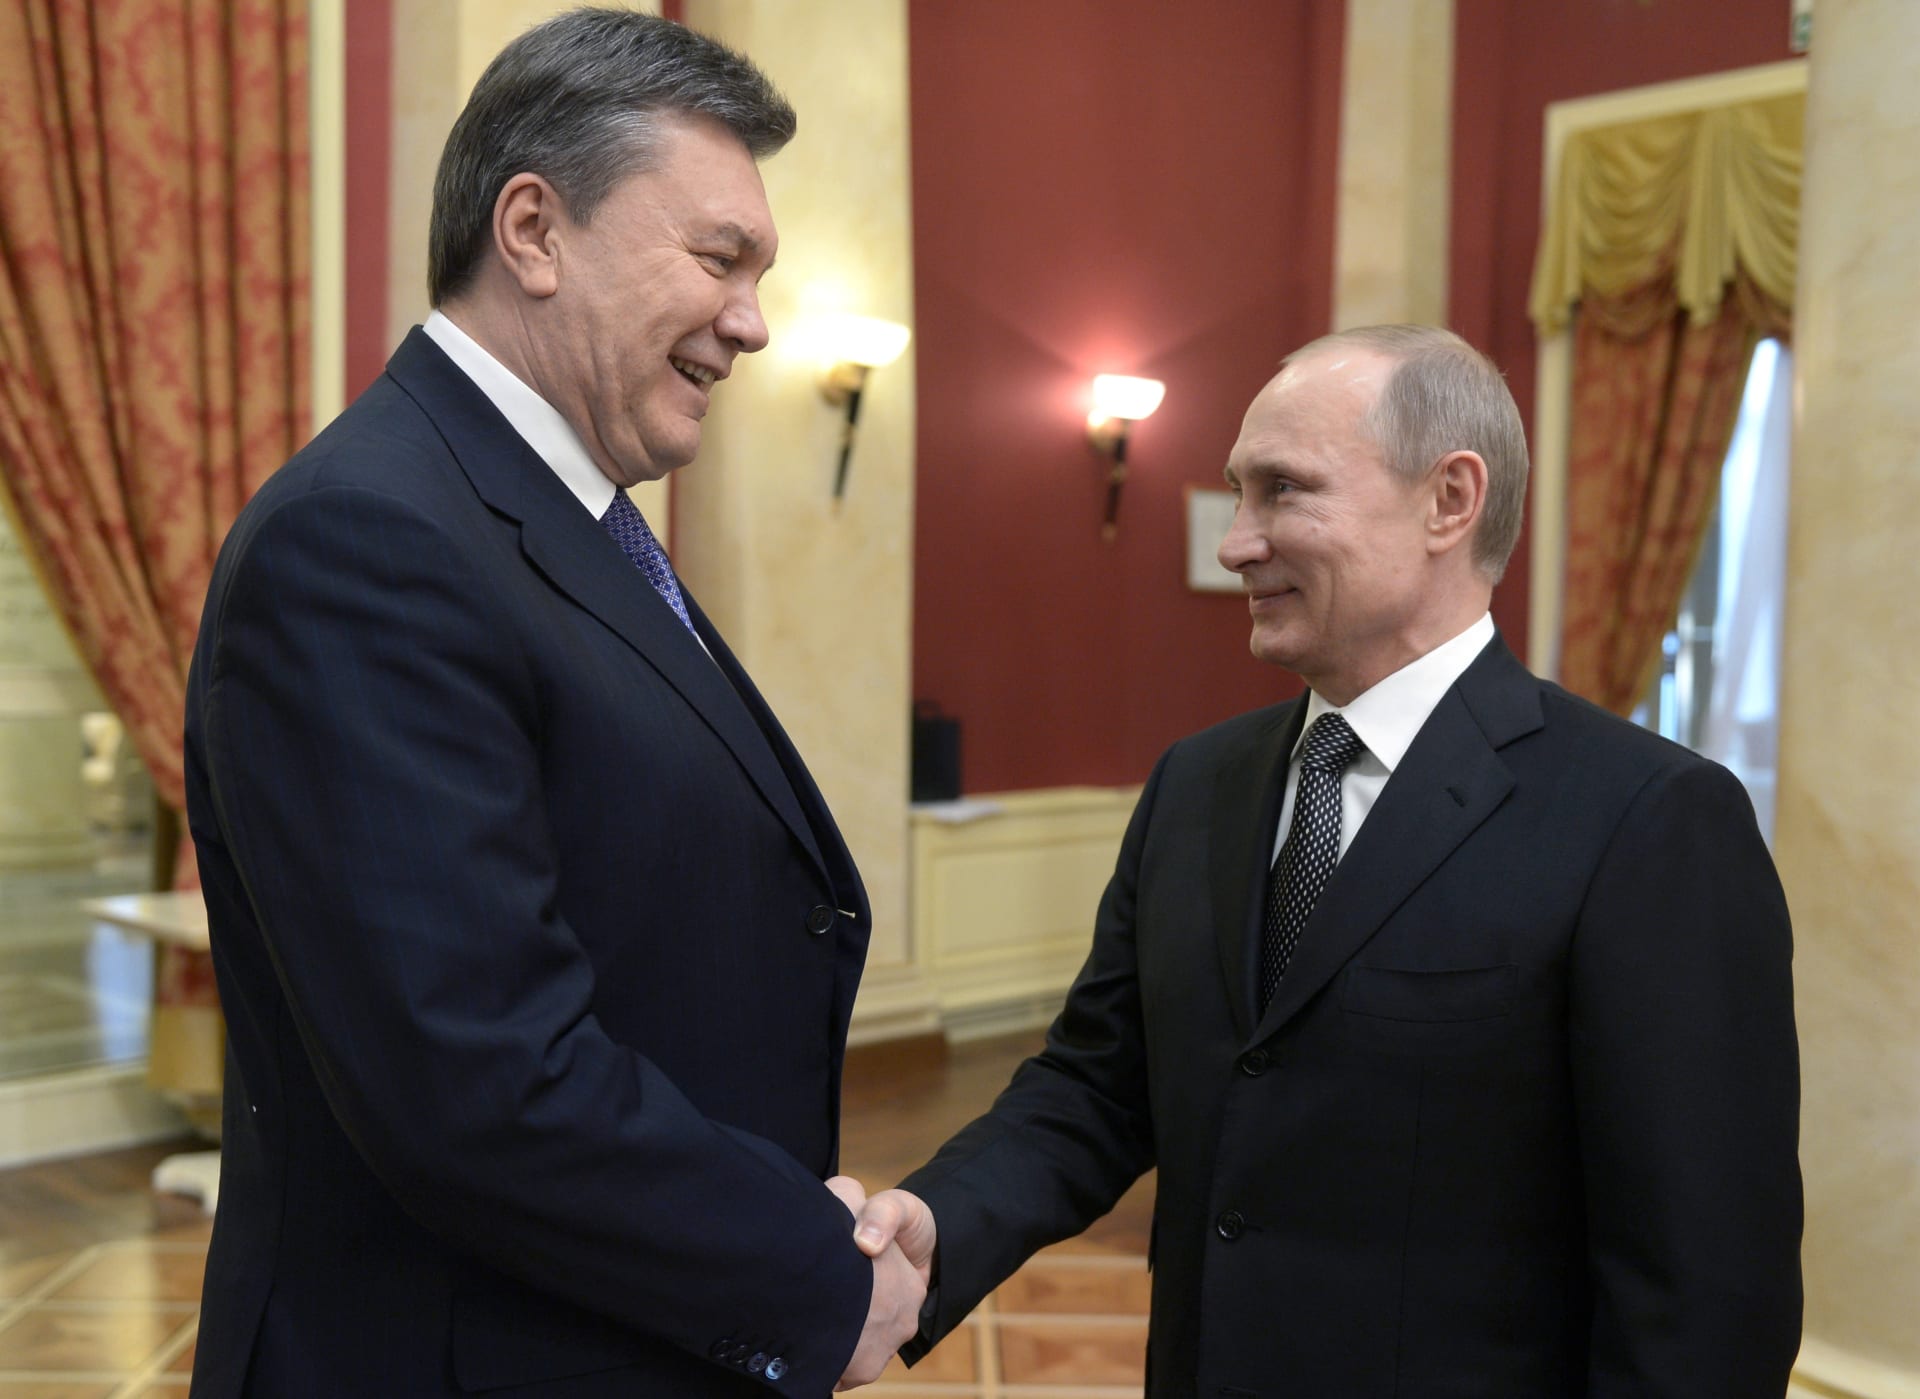 Viktor Janukovyč a Vladimir Putin